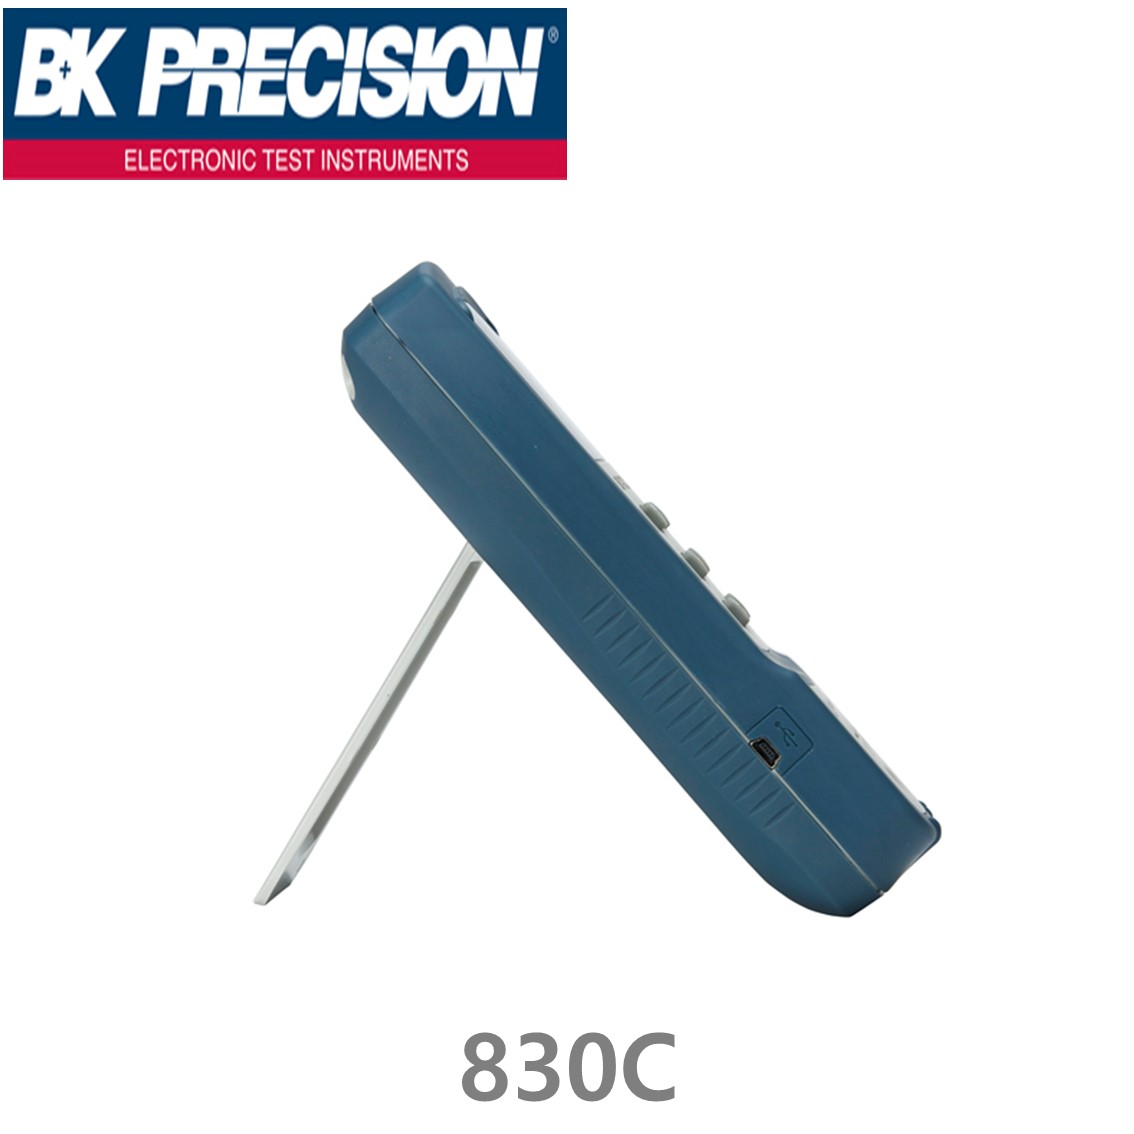 [ BK PRECISION ] BK 830C, Dual Display Handheld Capacitance Meter, 캐패시터메타, B&K 830C